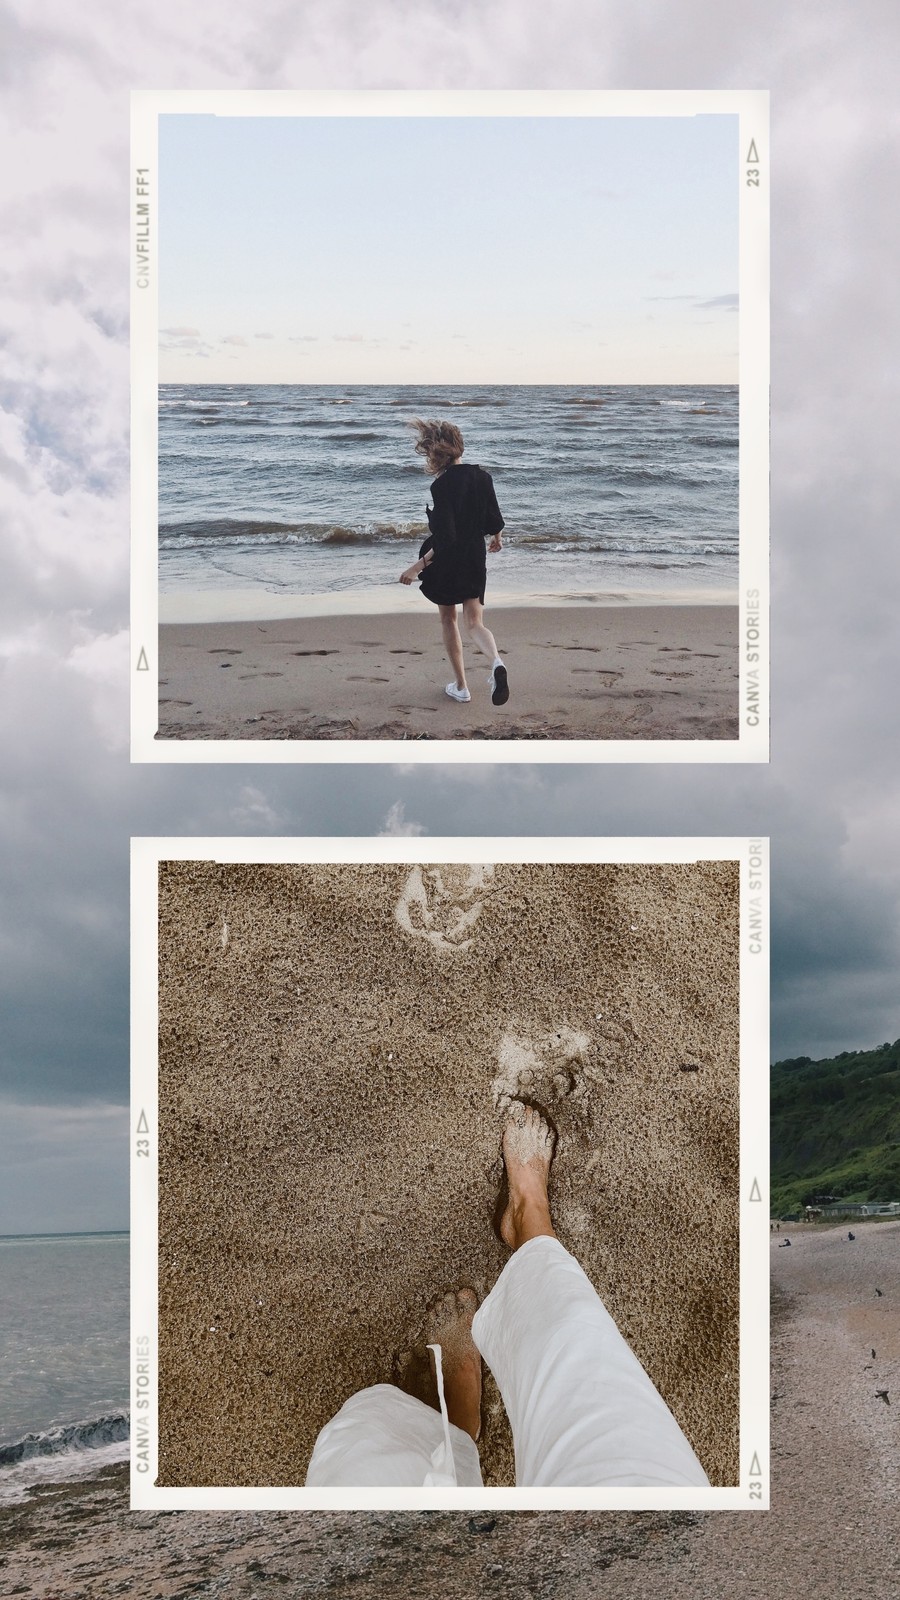 Cerita Instagram Bingkai Polaroid/Film Tumpukan Pantai